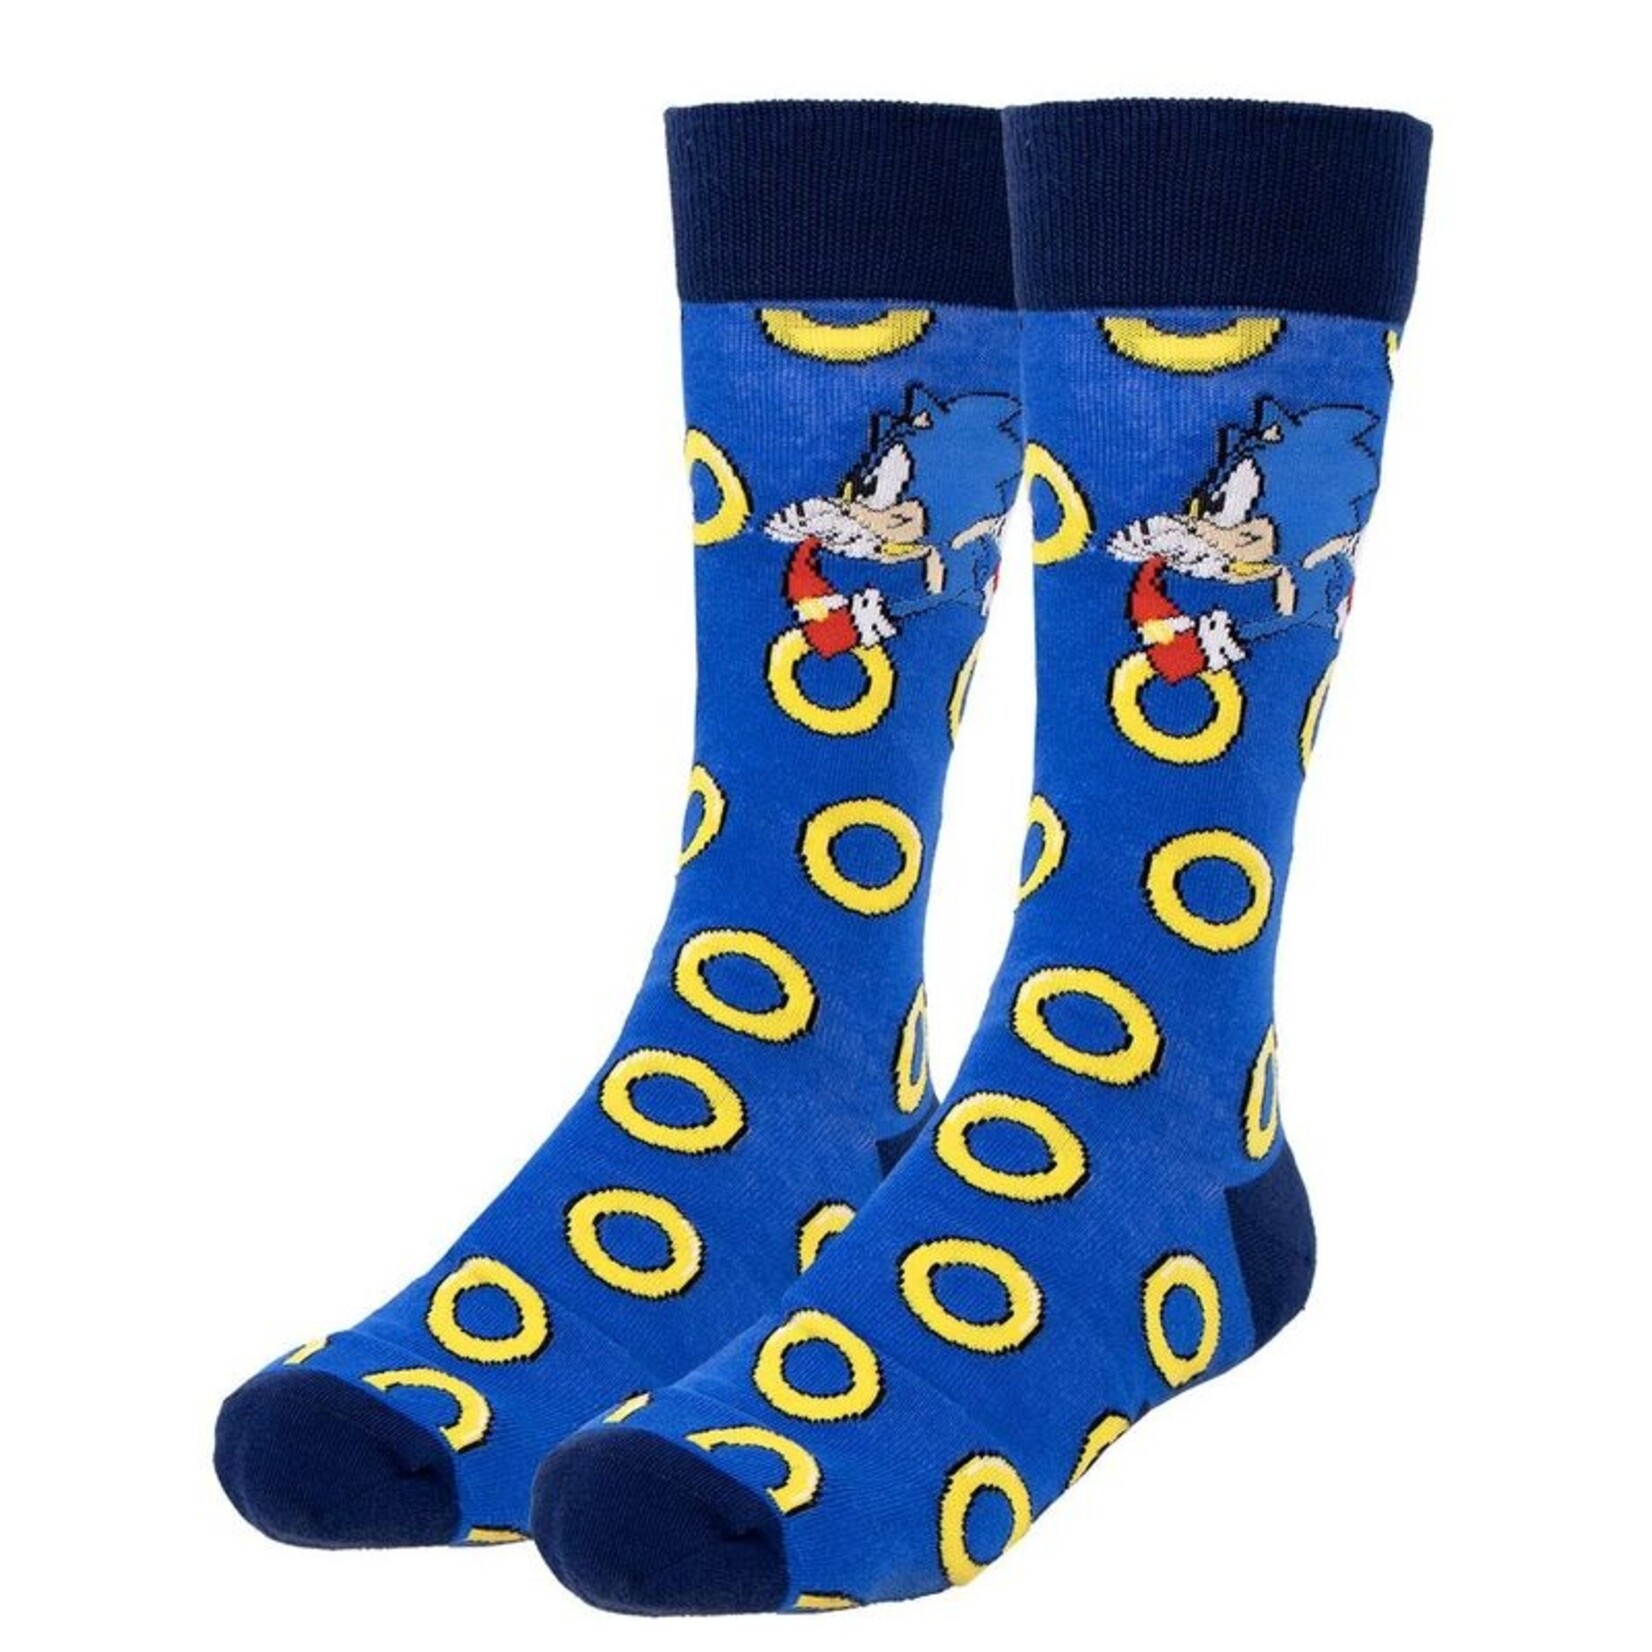 Cerdá Cerdá Sonic The Hedgehog Socks 3-Pack Size 40-46